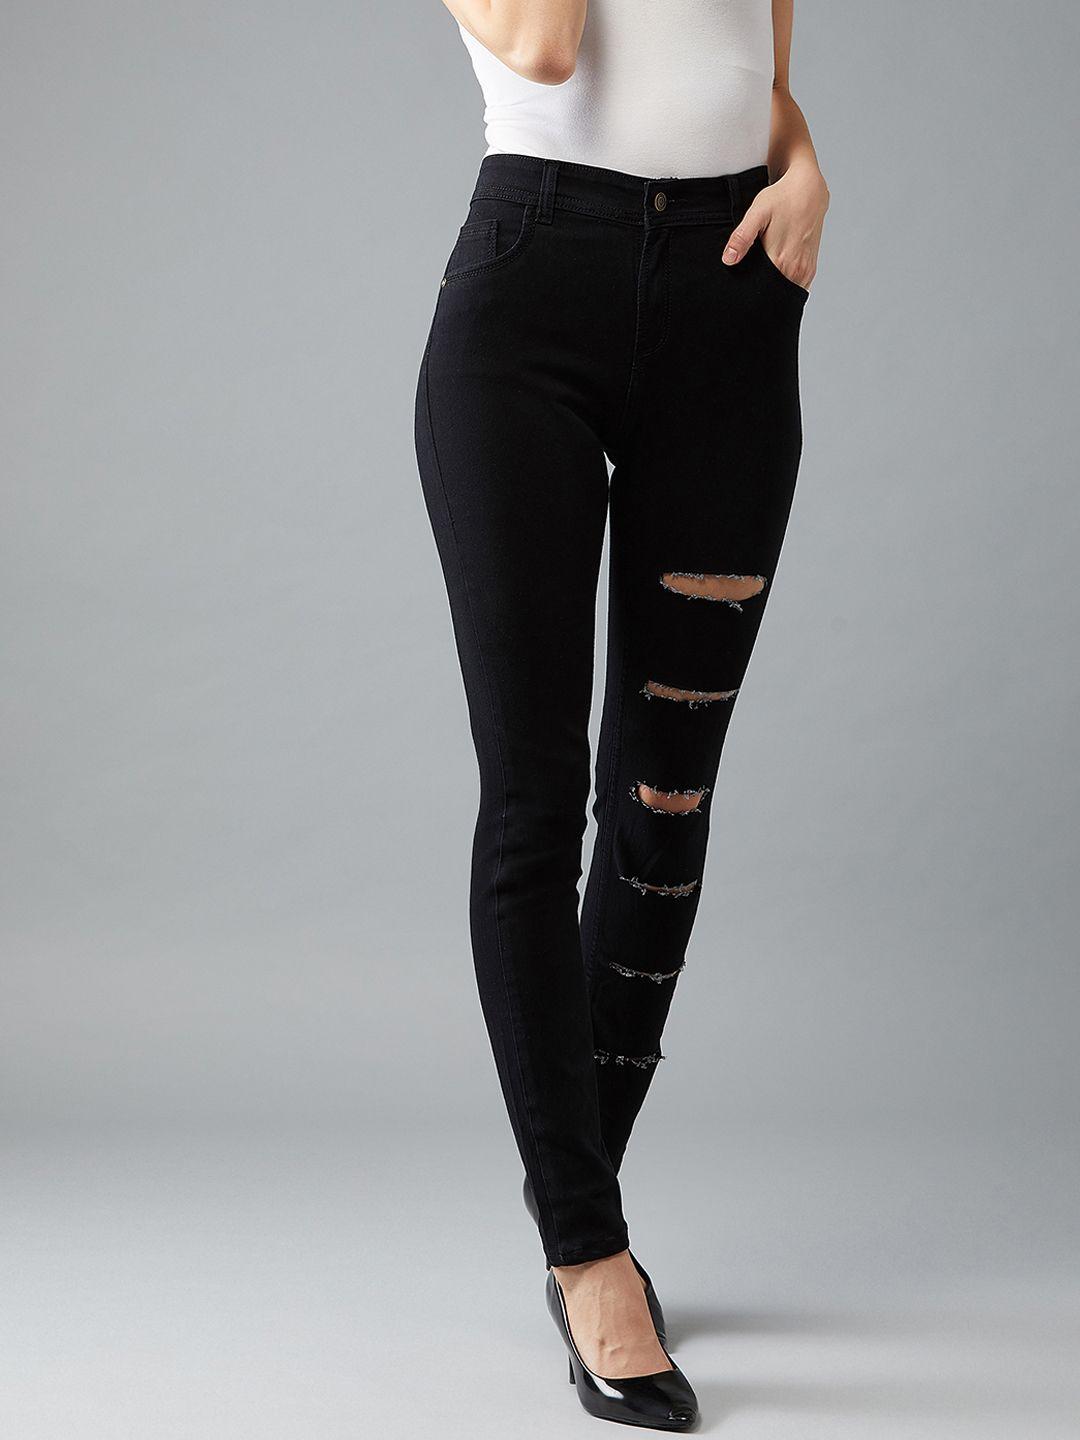 DOLCE CRUDO Women Black Slim Fit Jeans